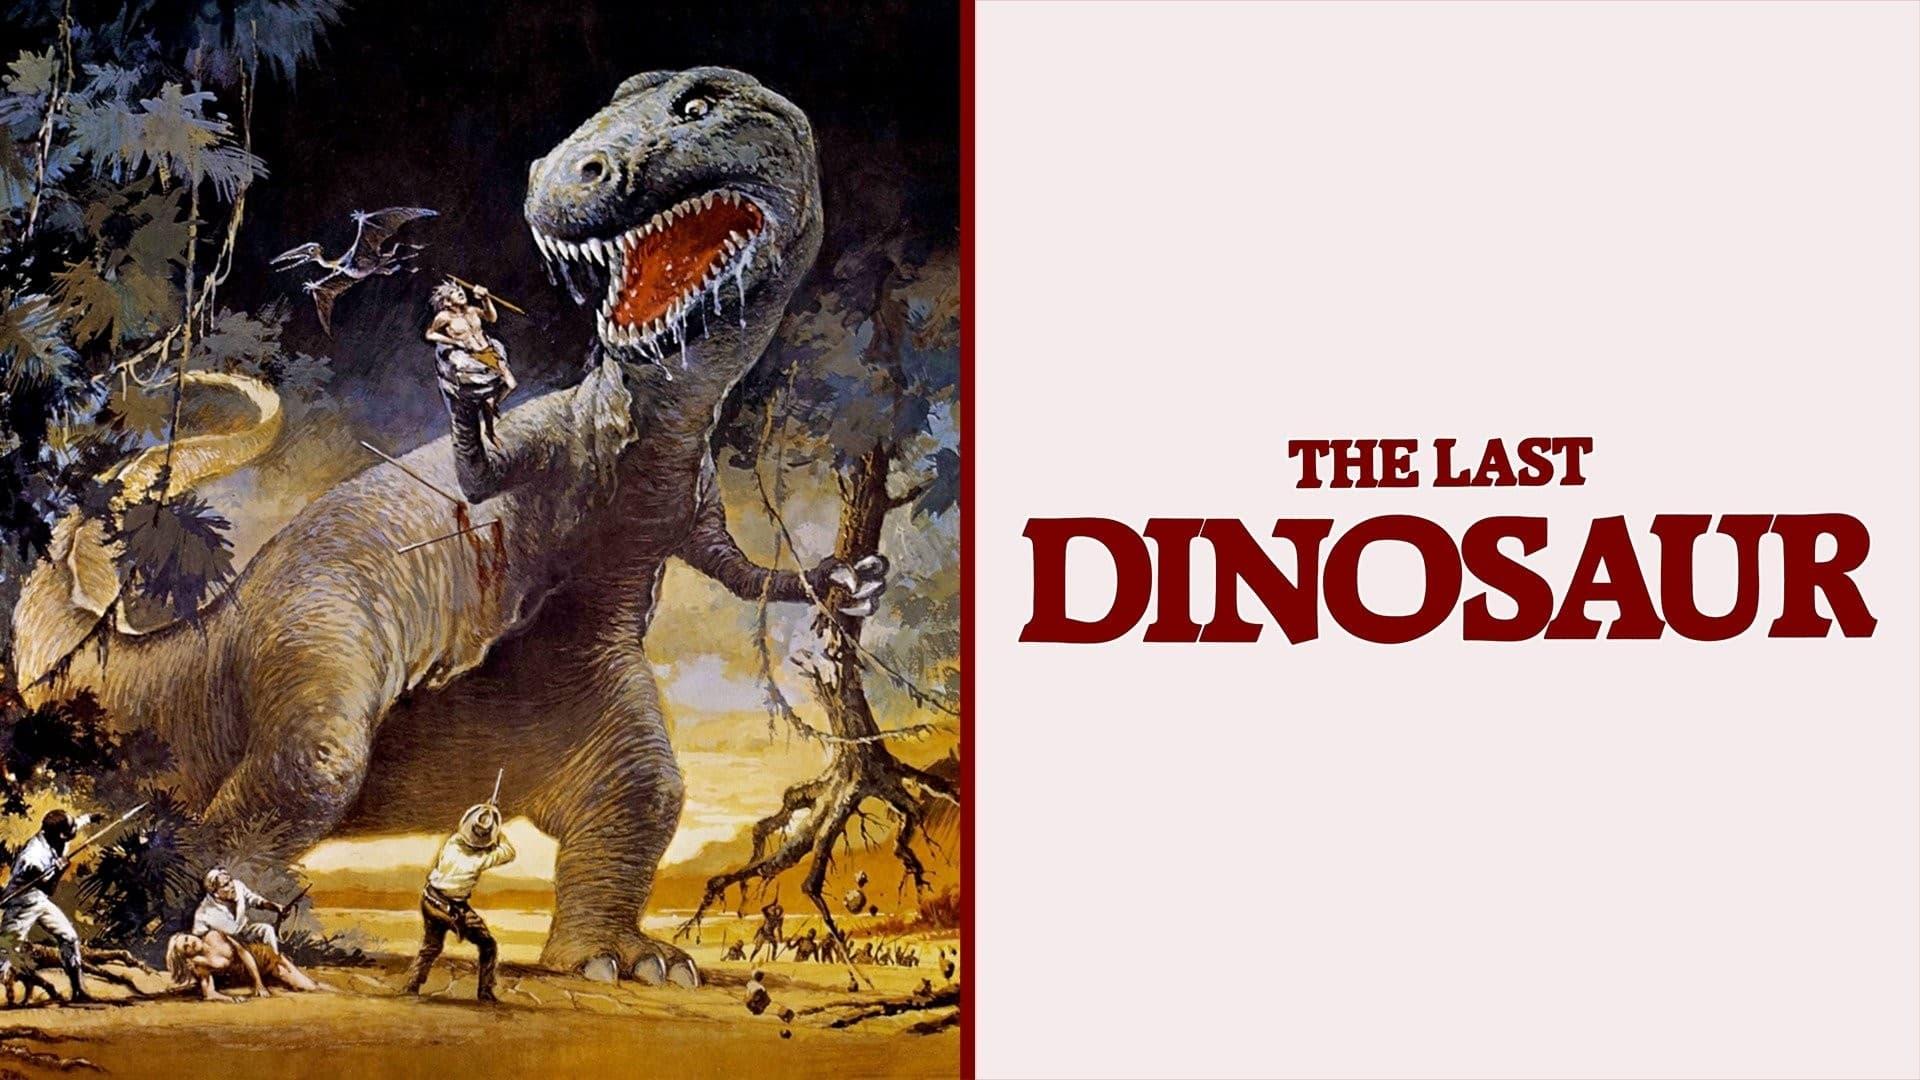 The Last Dinosaur backdrop